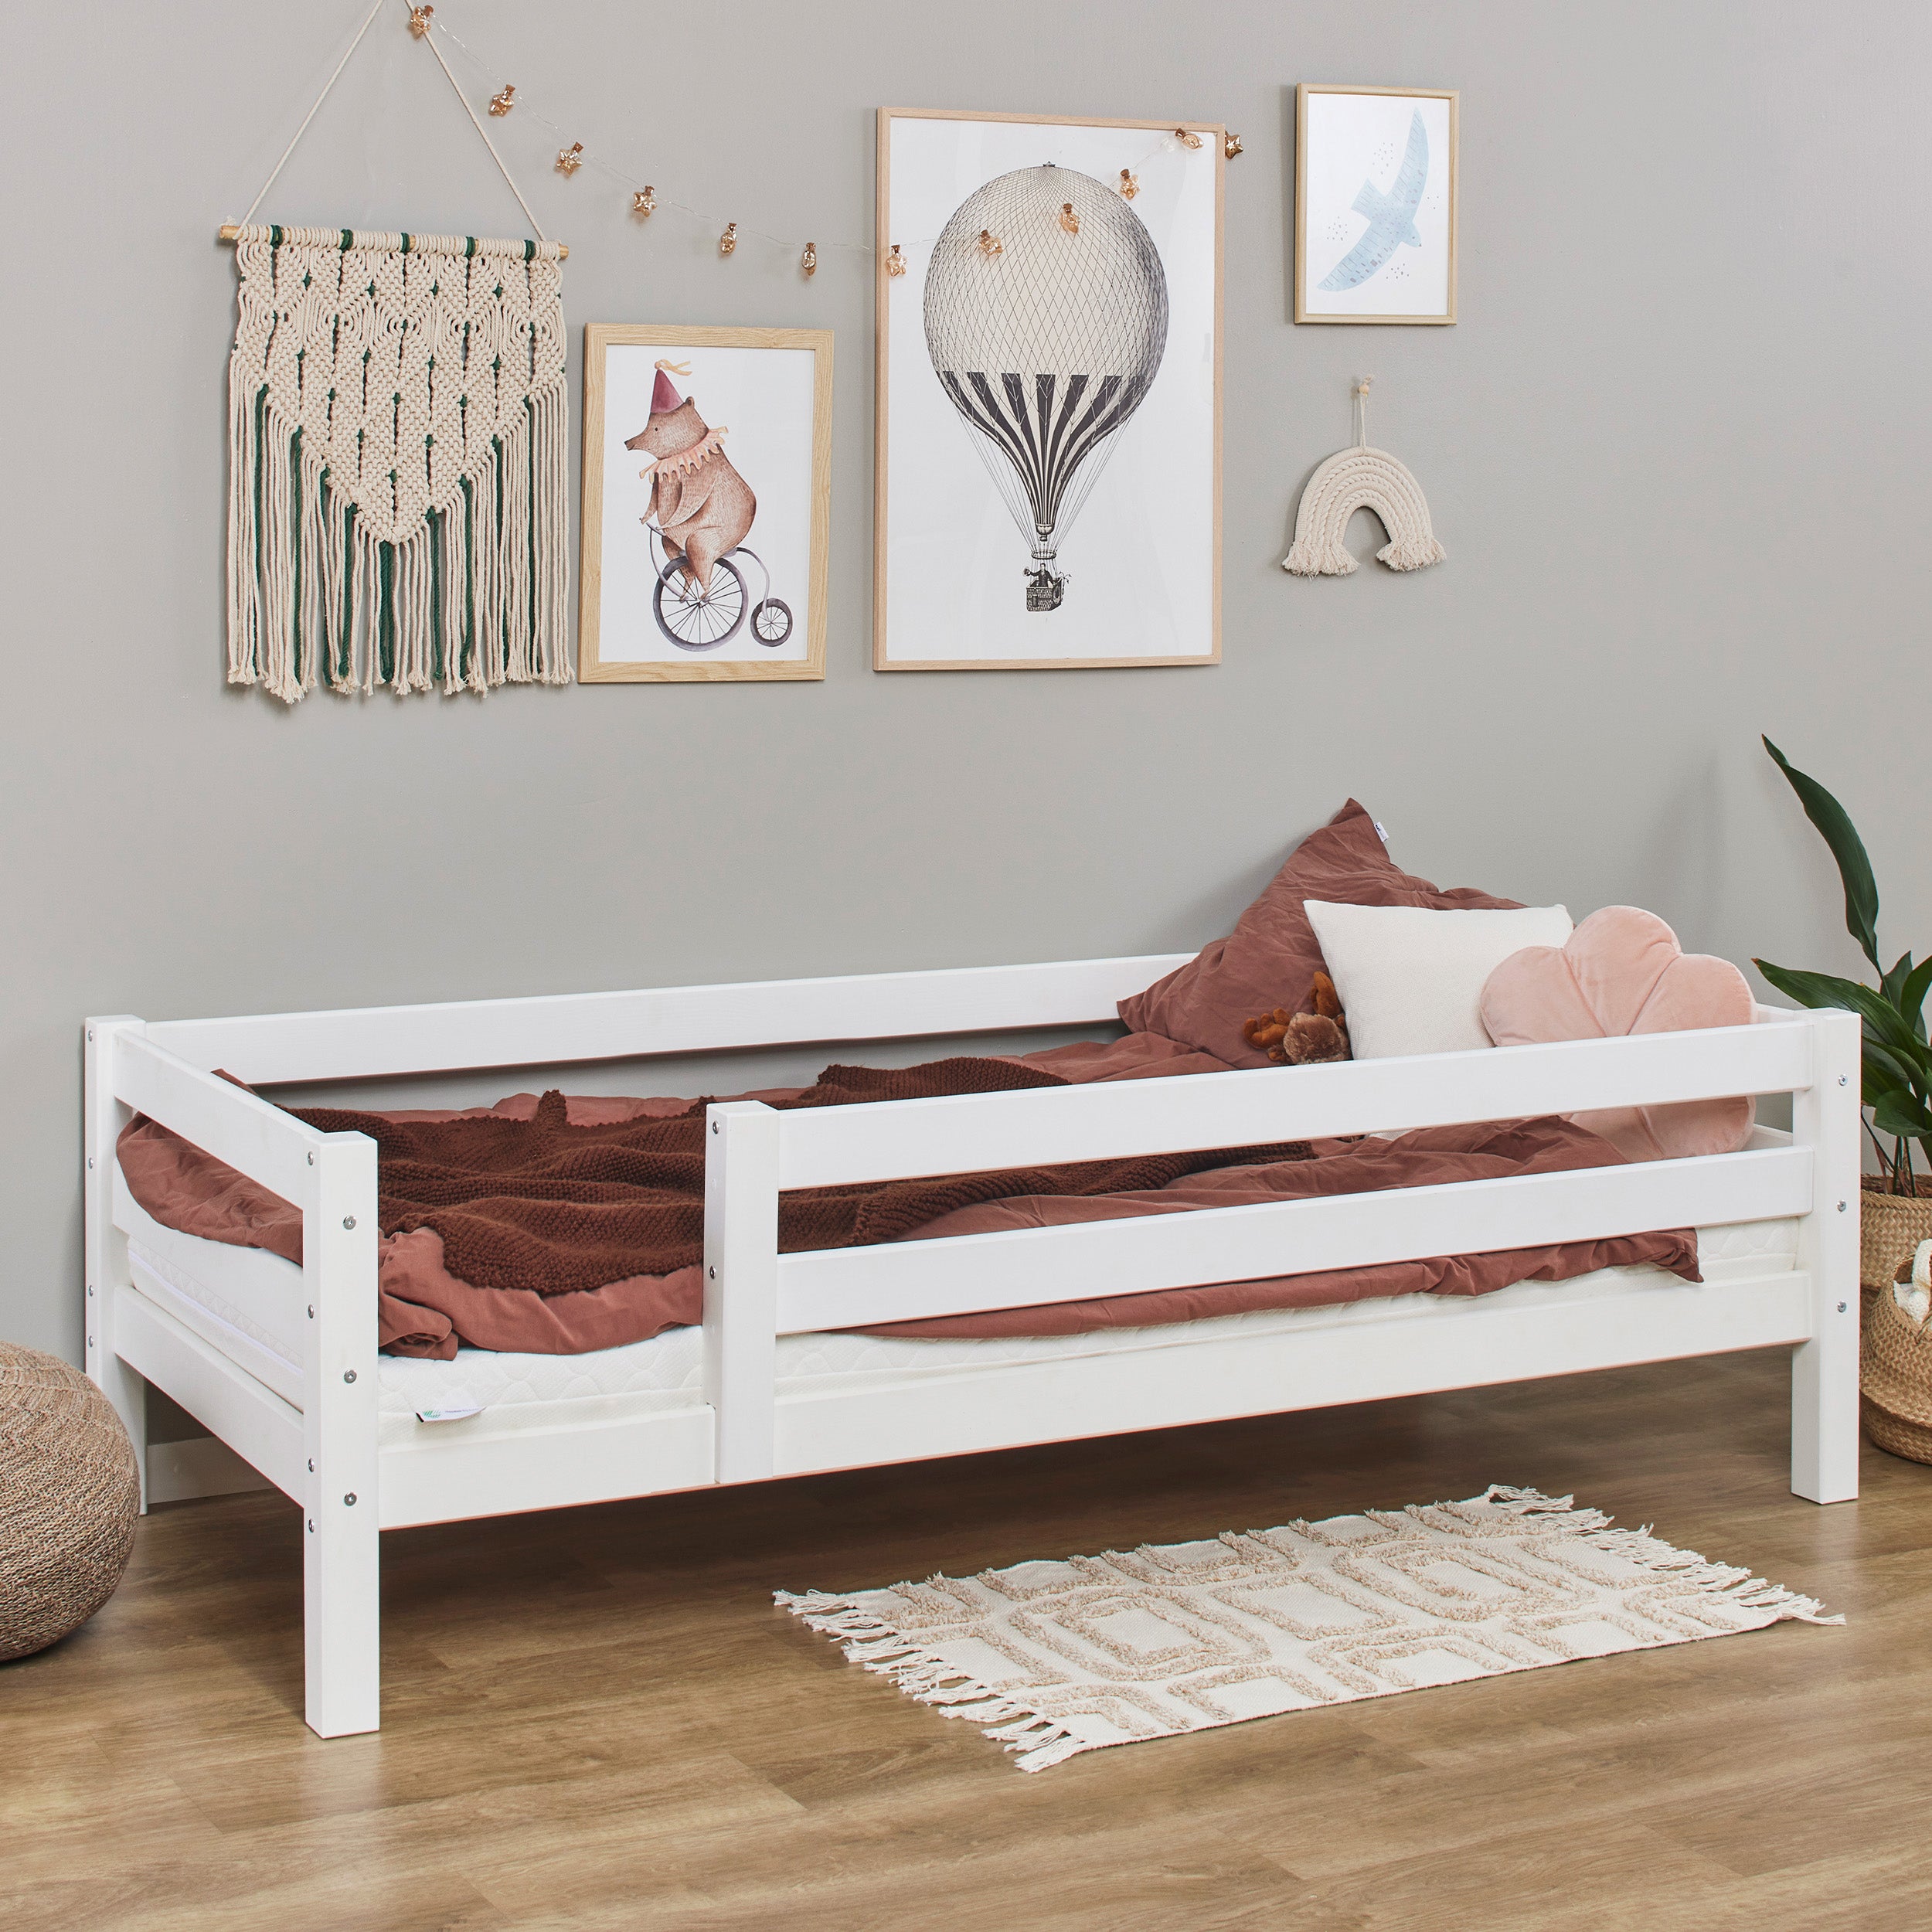 Hoppekids ECO Luxury Toddler Bed